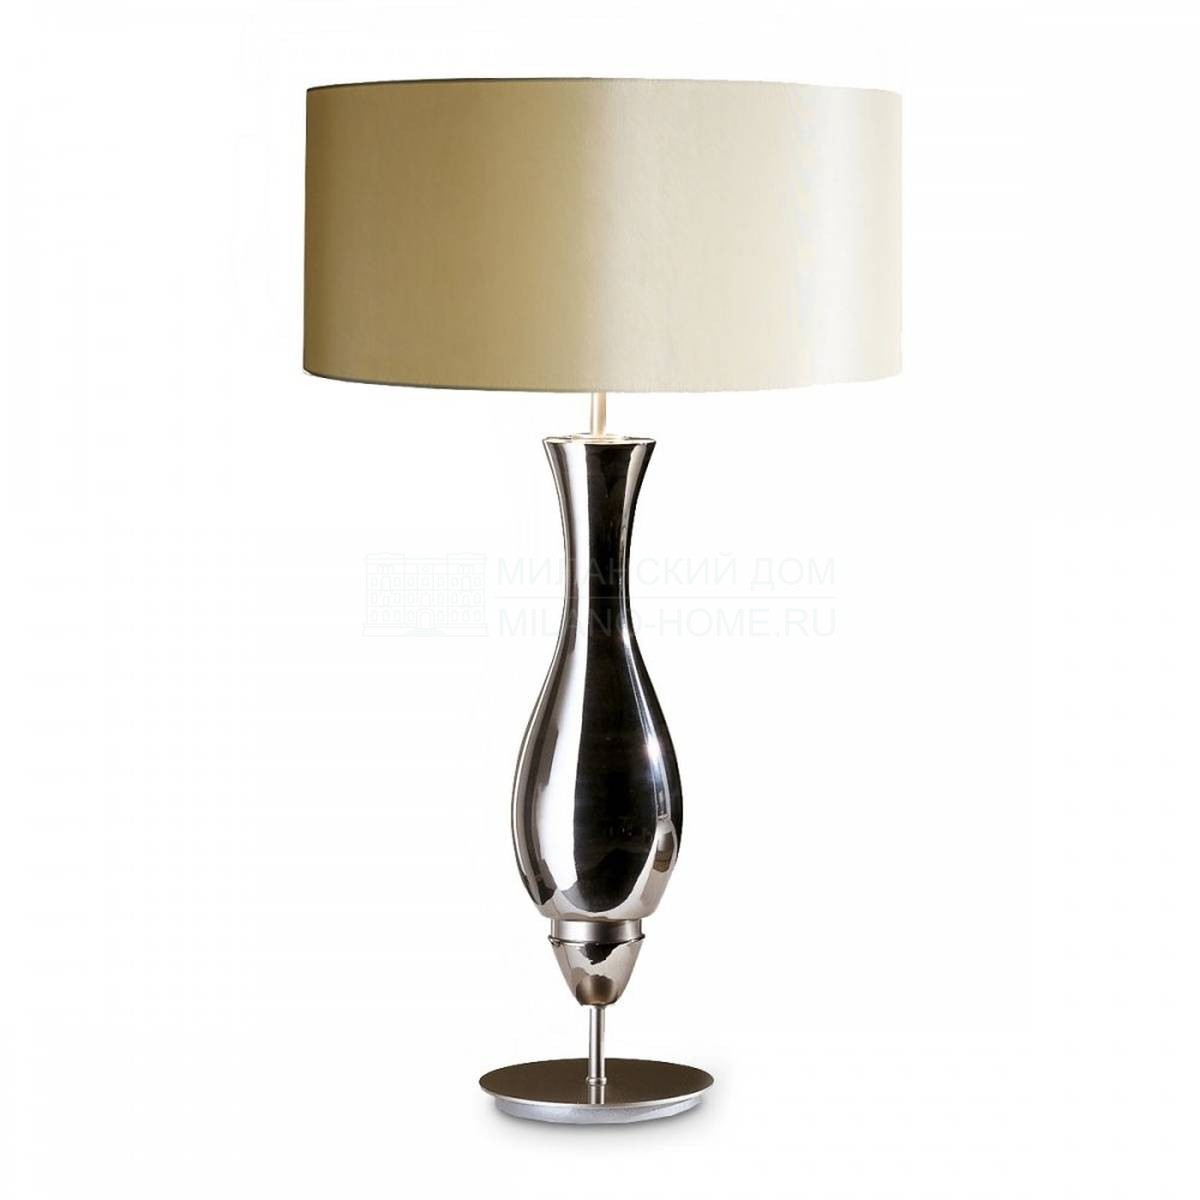 Настольная лампа Mul table lamp из Италии фабрики MARIONI